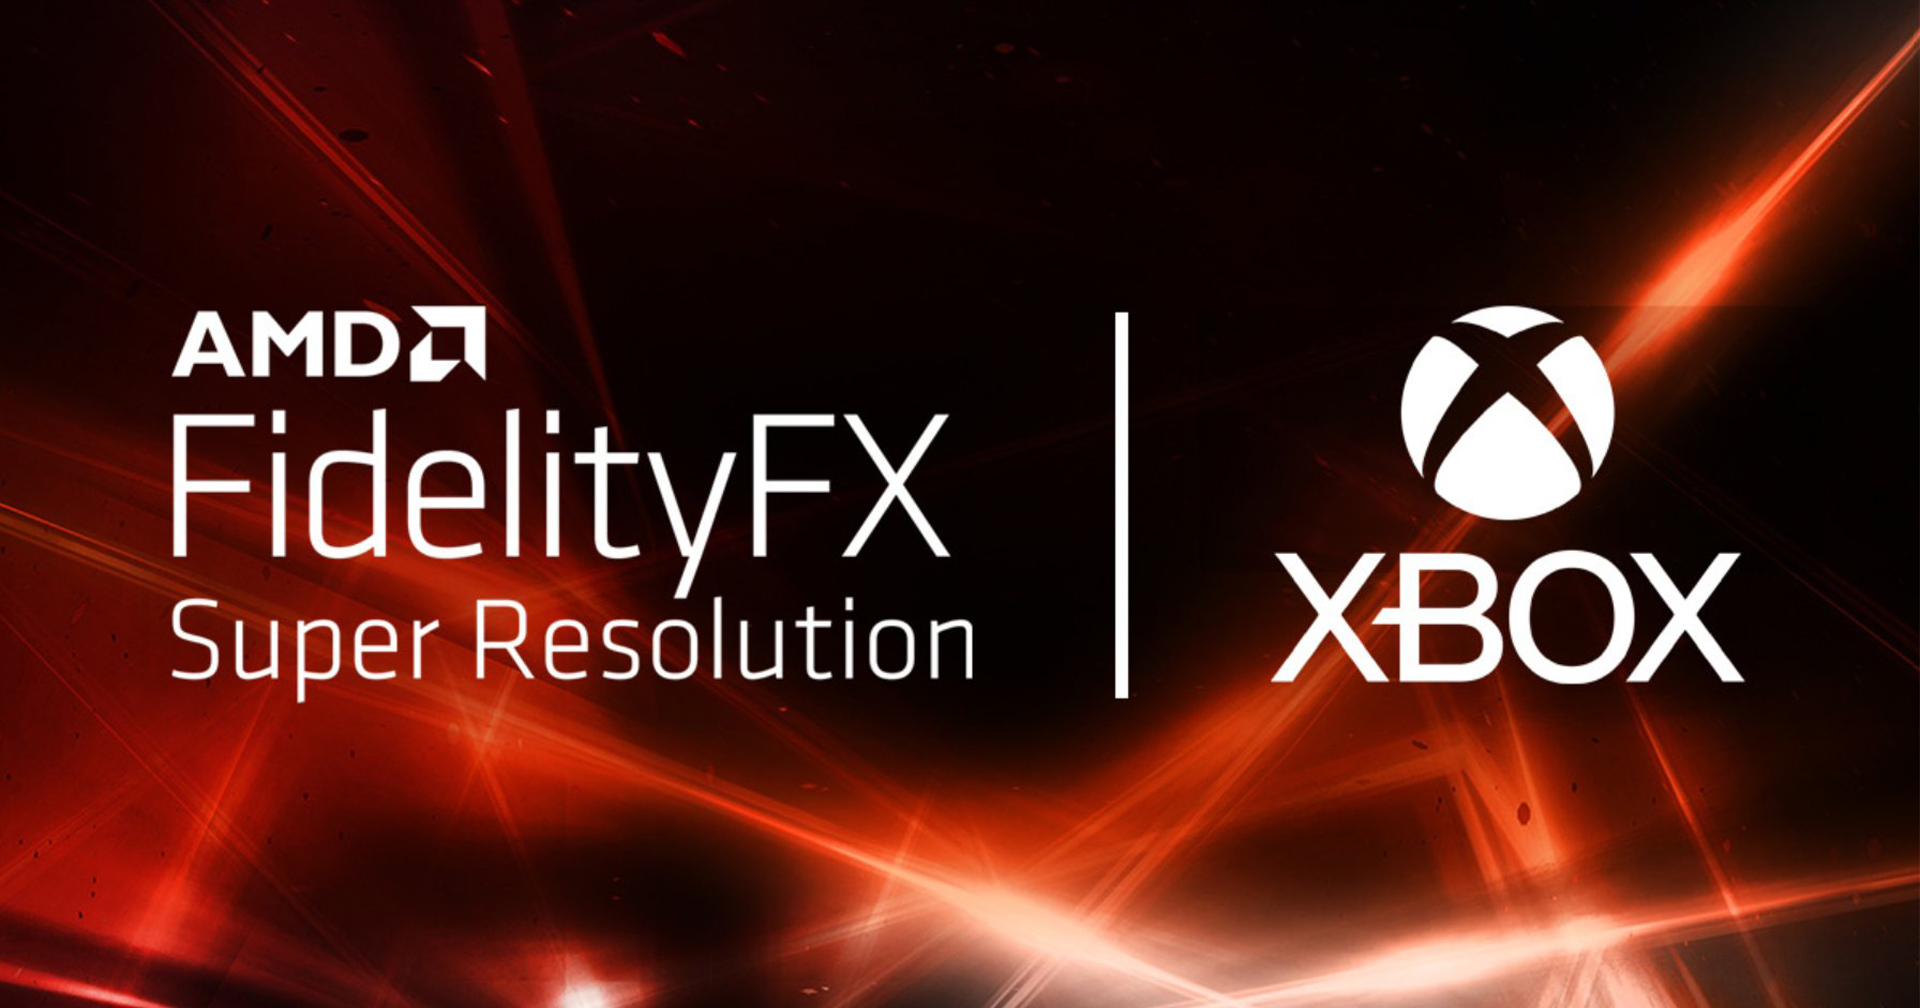 Xbox ประกาศรองรับ FidelityFX Super Resolution ของ AMD อย่างเป็นทางการ